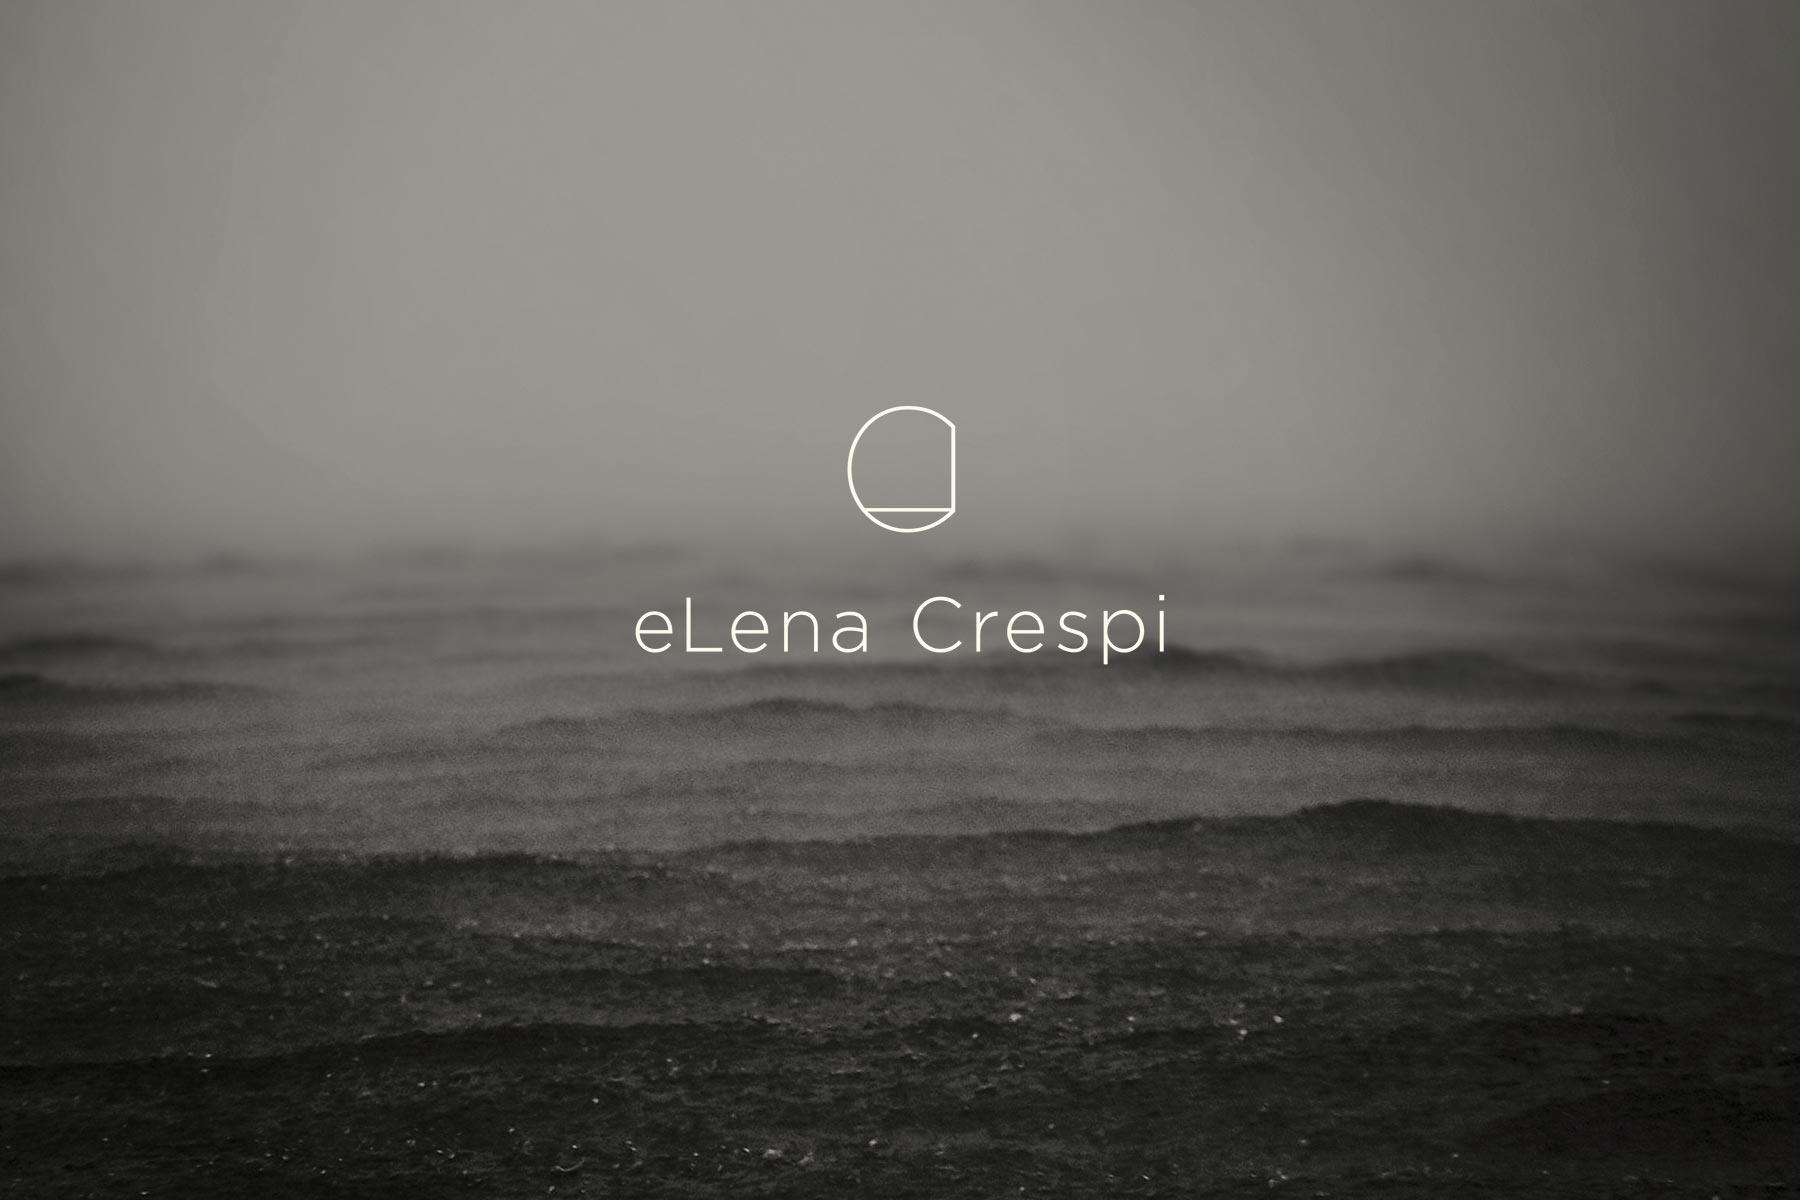 eLena-Crespi-Disseny-Grafic-Marca-01